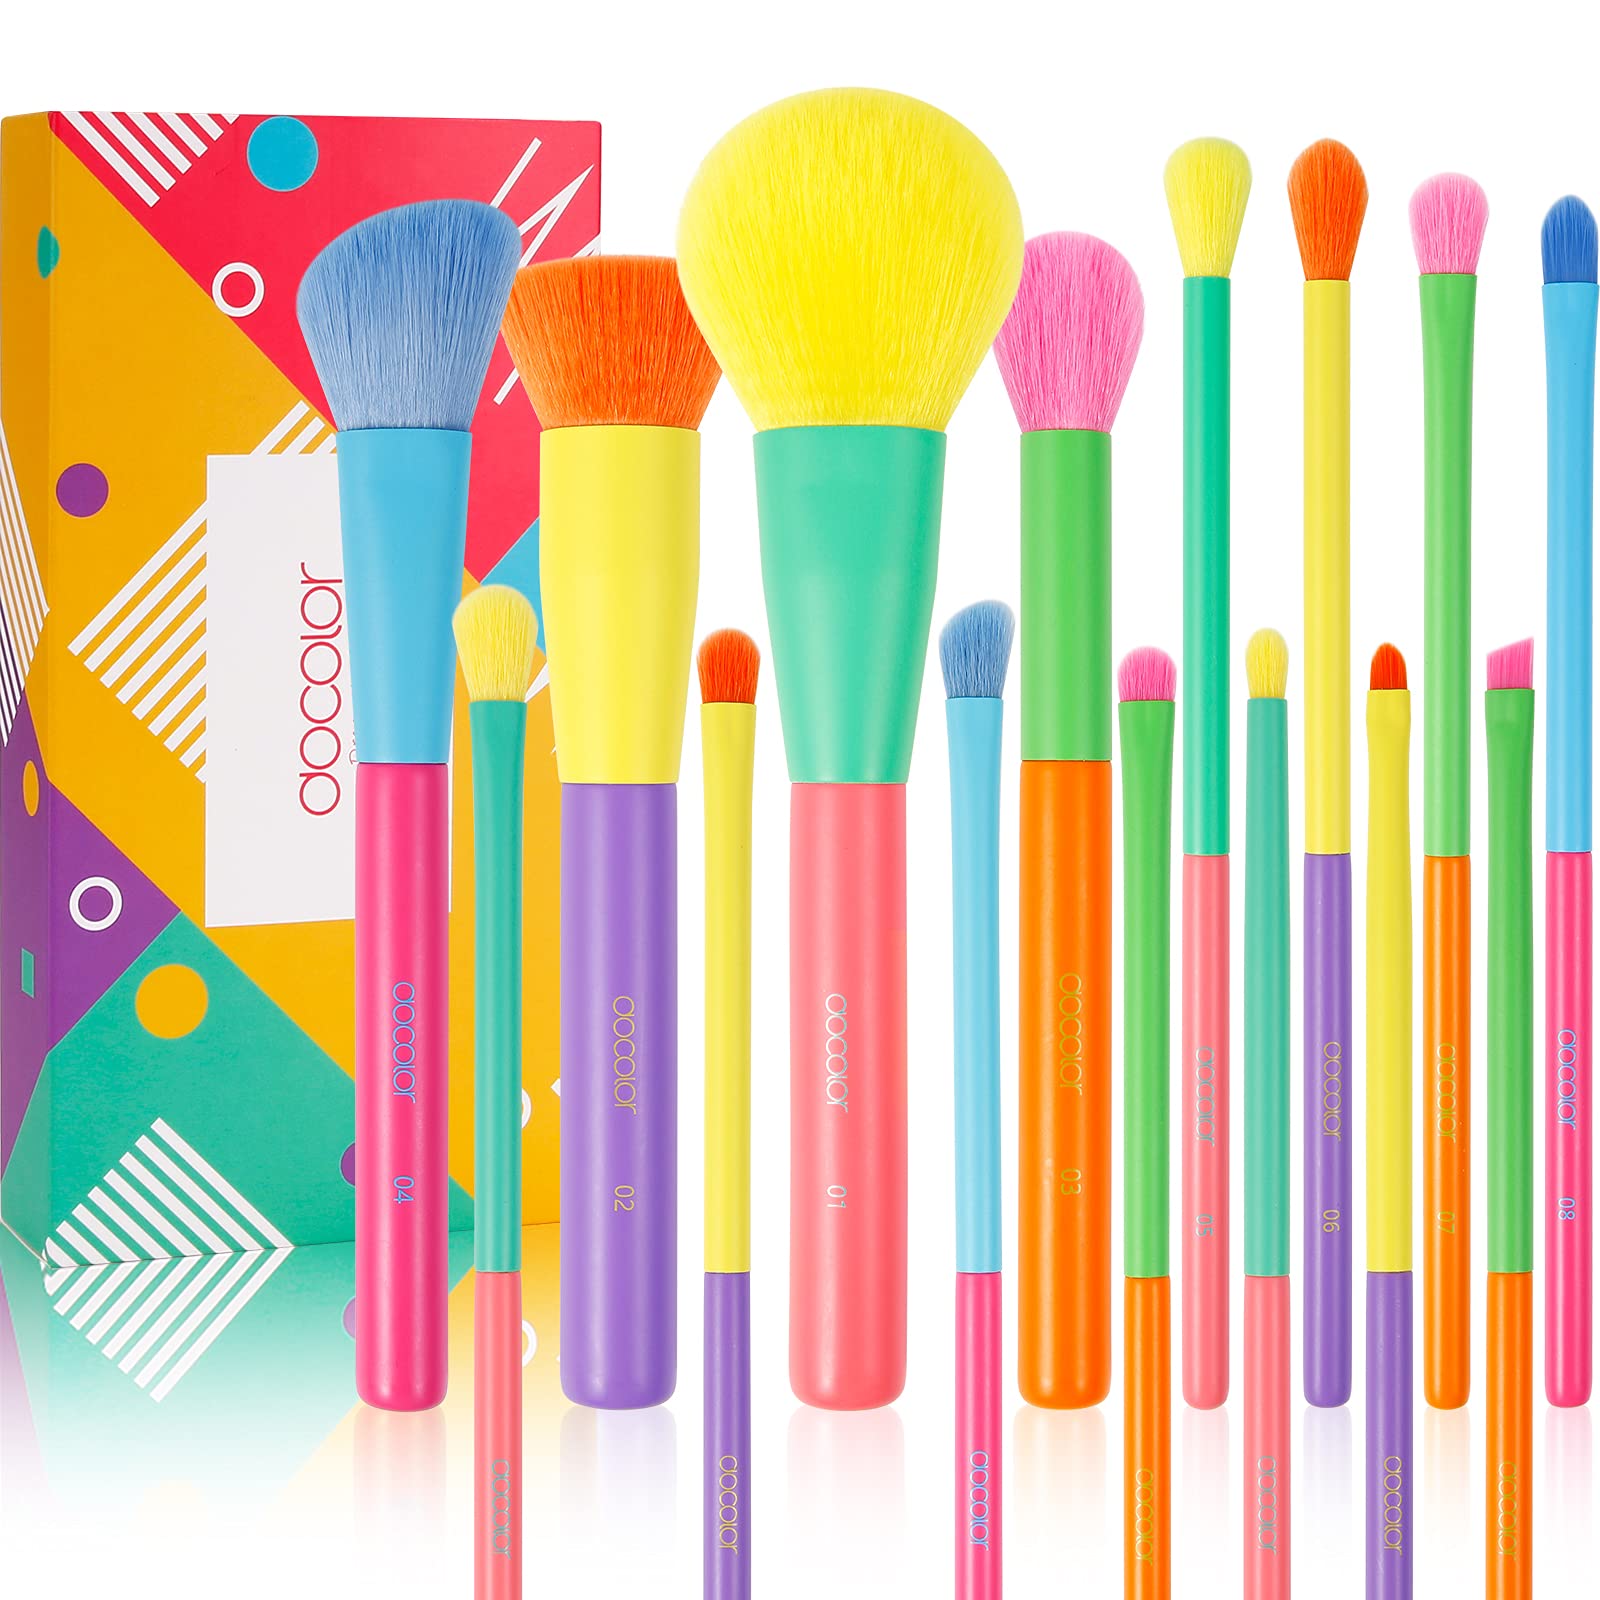 Docolor Makeup Brushes 15Pcs Colourful Makeup Brush Set Premium Gift Synthetic Face Powder Kabuki Foundation Contour Blush Concealers Eye Shadow Blending Make Up Brush Kit - Dream of Color